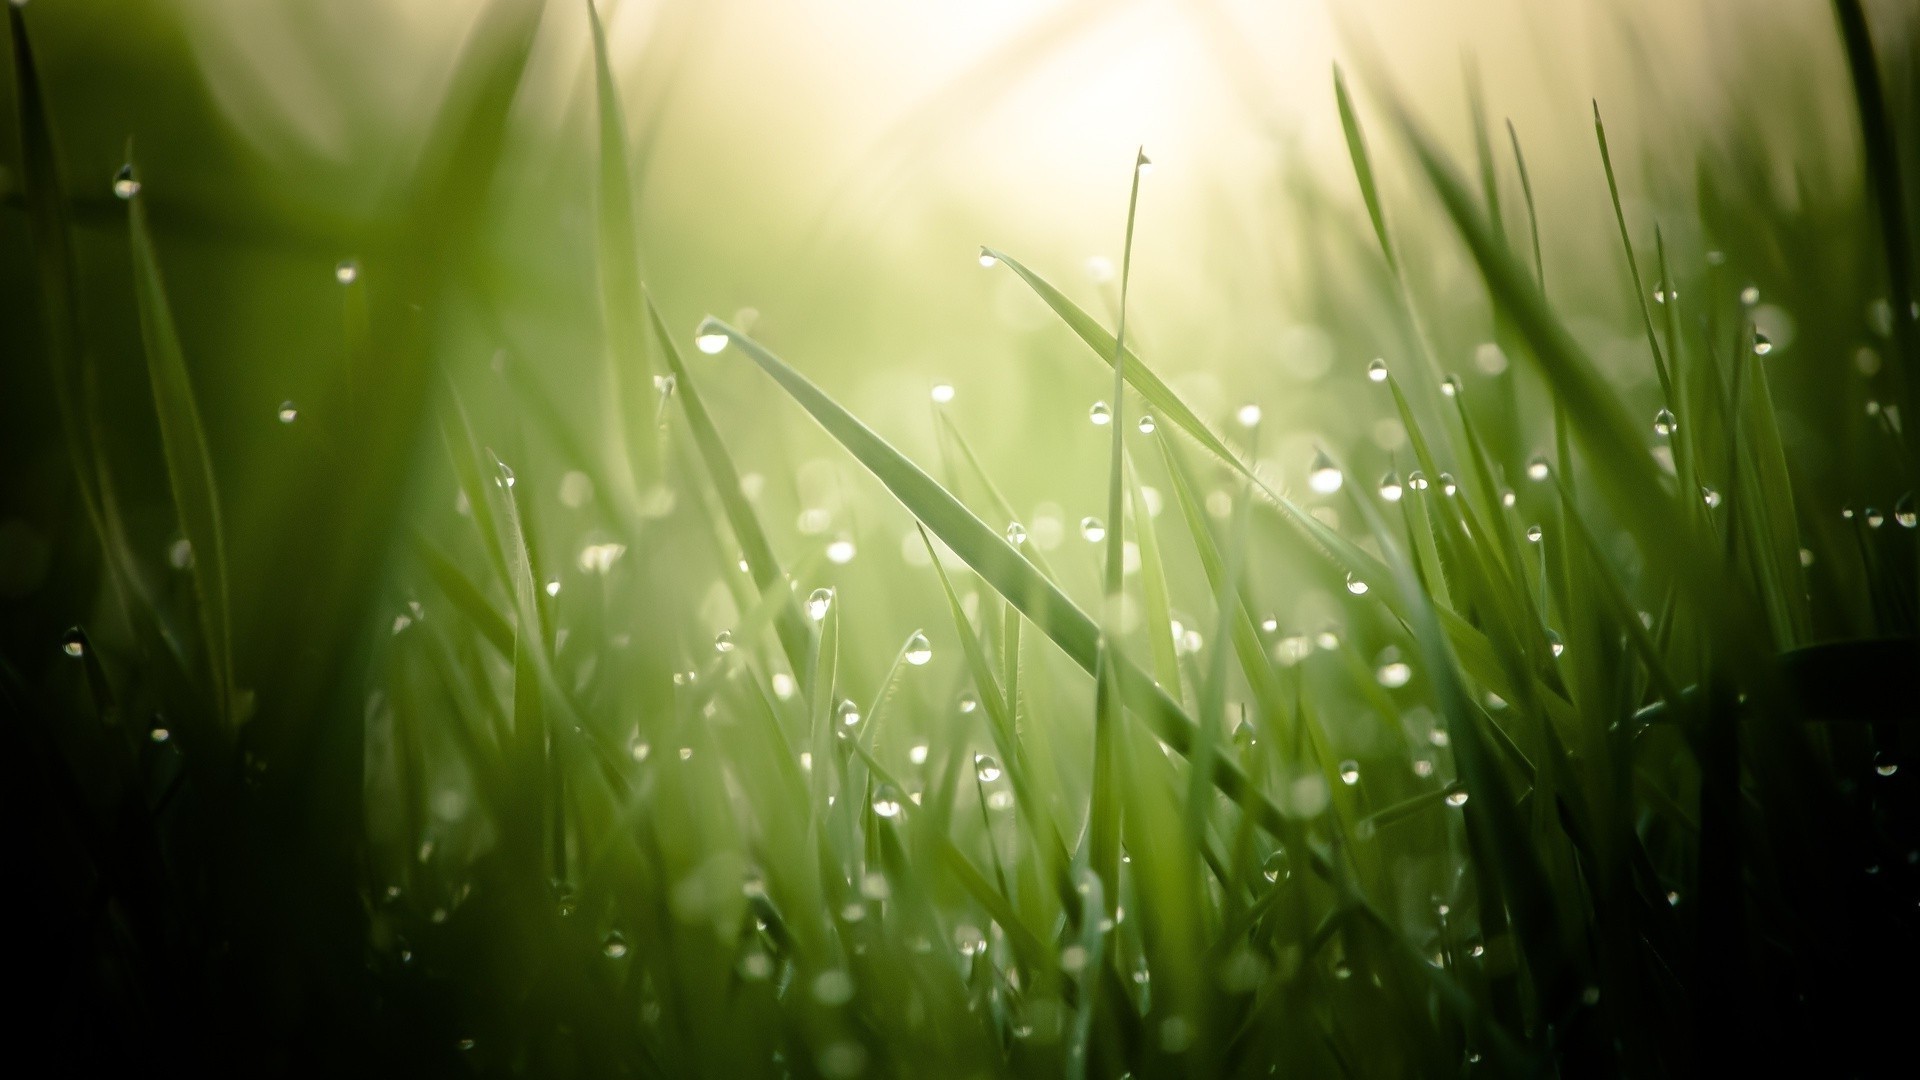 droplets and water grass dew leaf nature lawn summer garden lush growth flora rain drop sun bright hayfield dawn